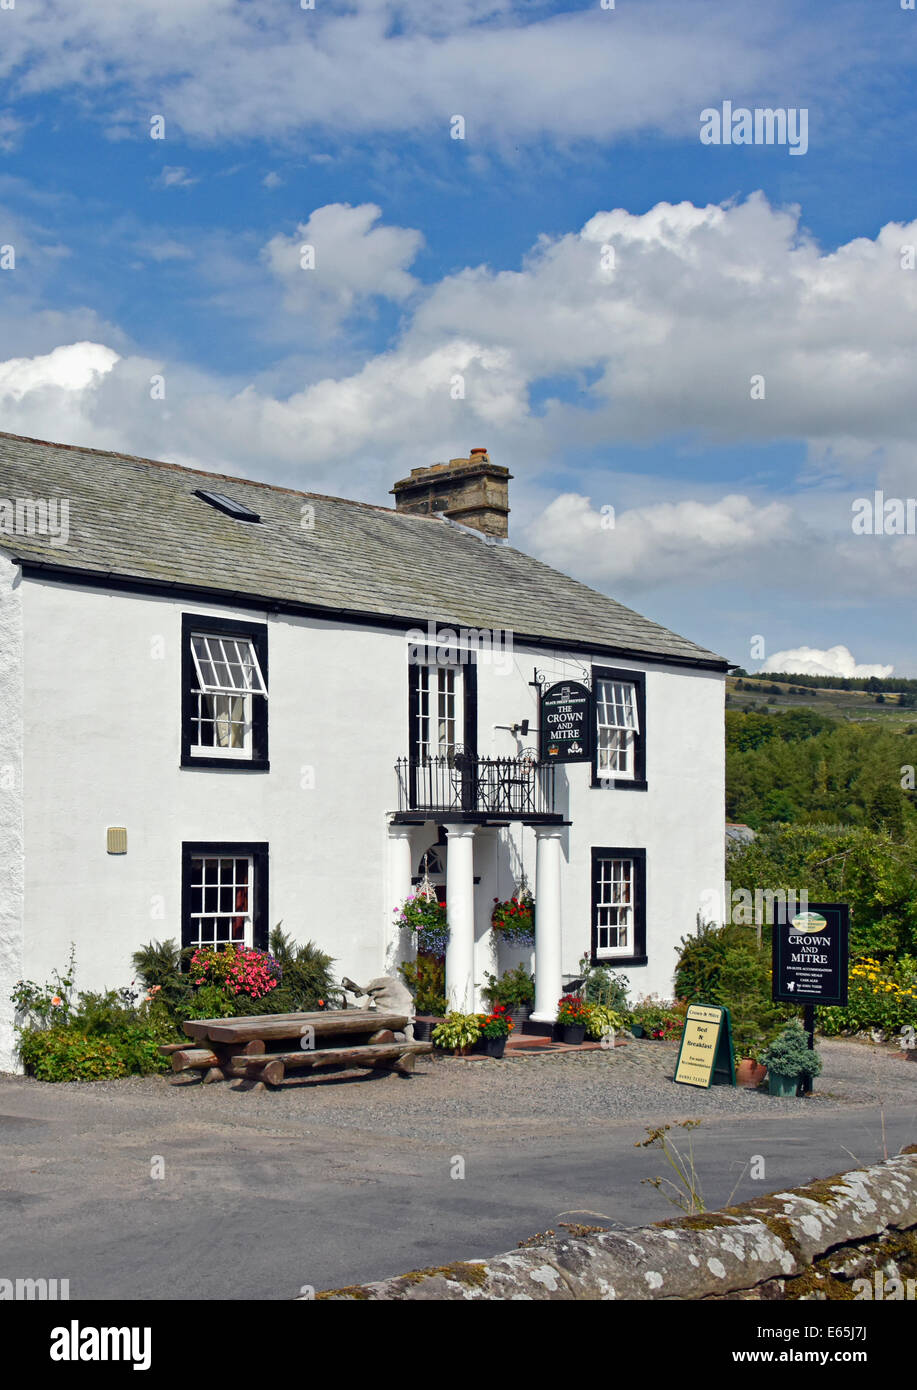 The Crown and Mitre Inn. Brampton Grange, Lake District National Park, Cumbria, England, United Kingdom, Europe. Stock Photo